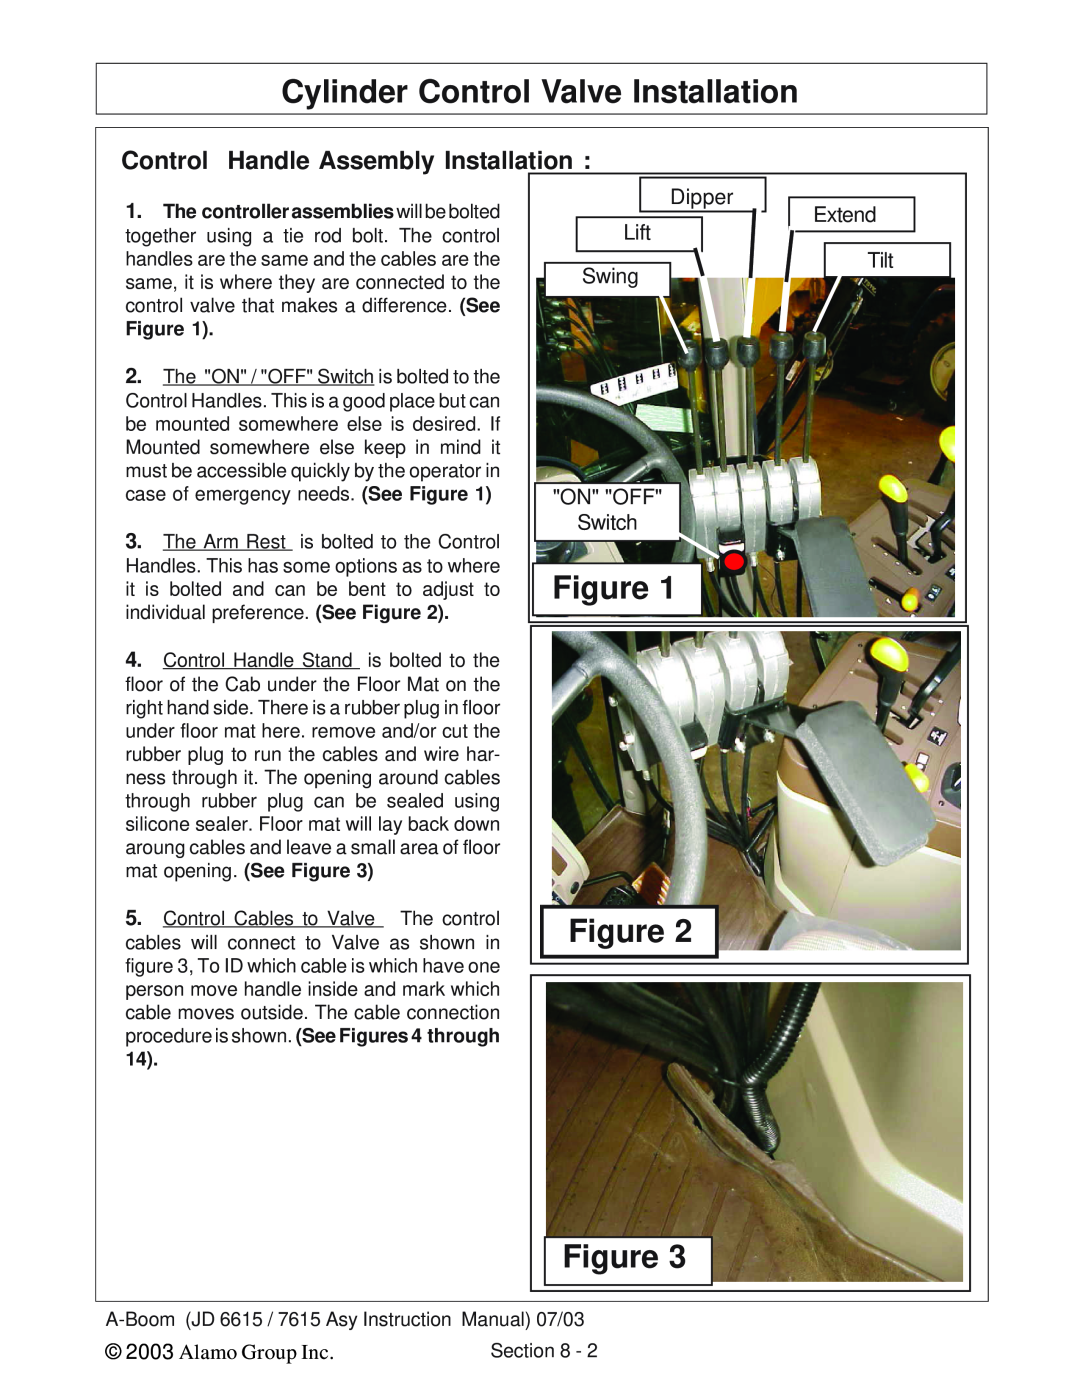 Alamo DSEB-D16/SAS instruction manual Cylinder Control Valve Installation, Handle Assembly Installation, Alamo Group Inc 